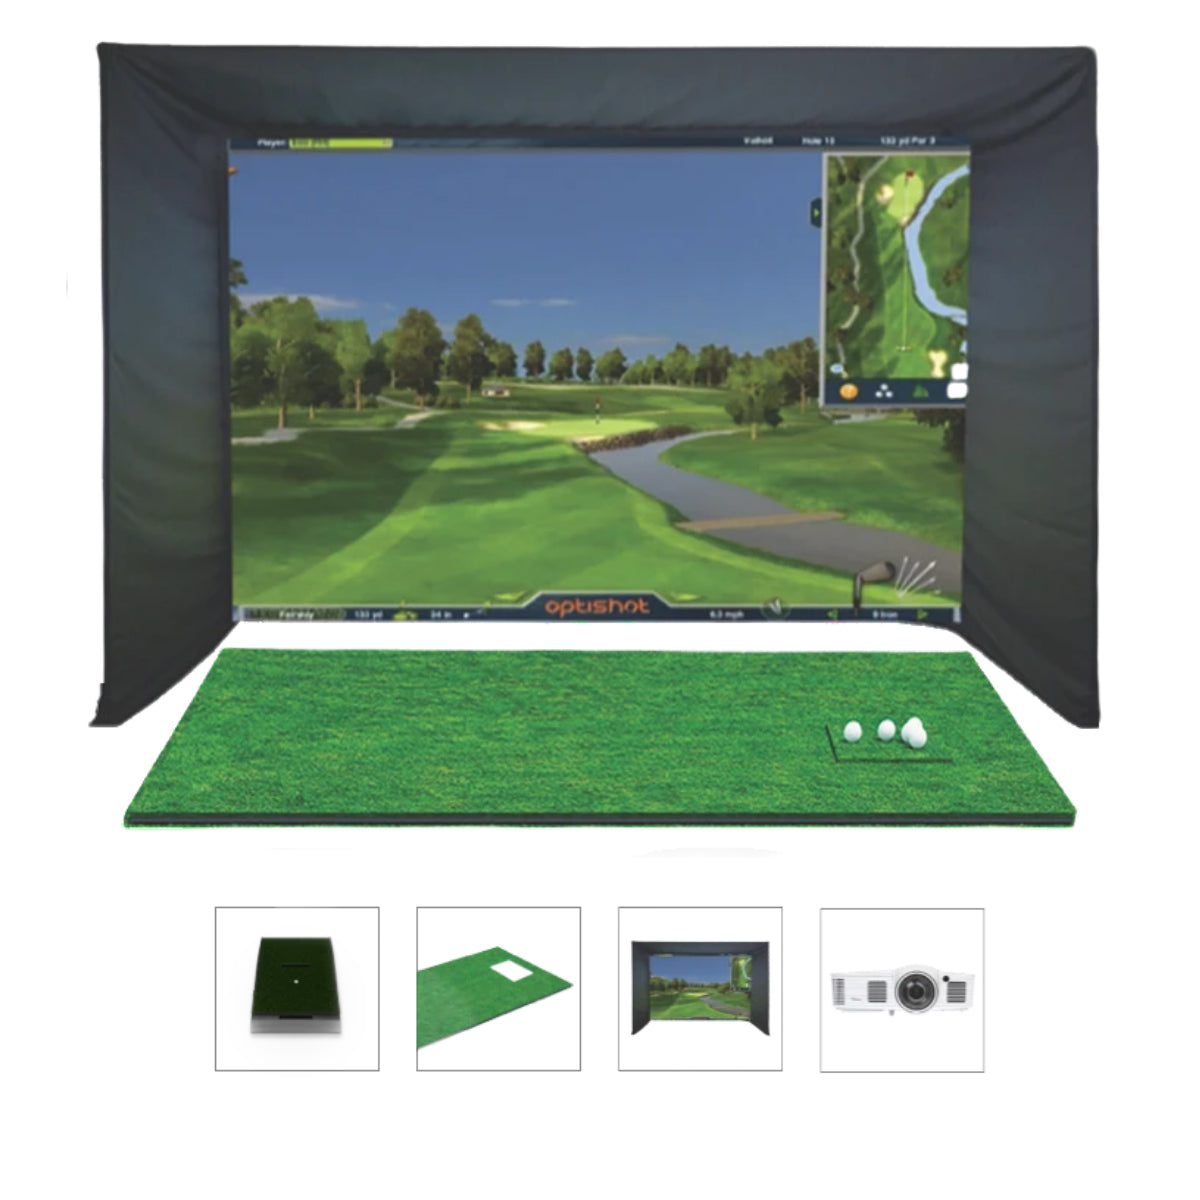 OptiShot Golf In A Box 4 - greatnorthgolf